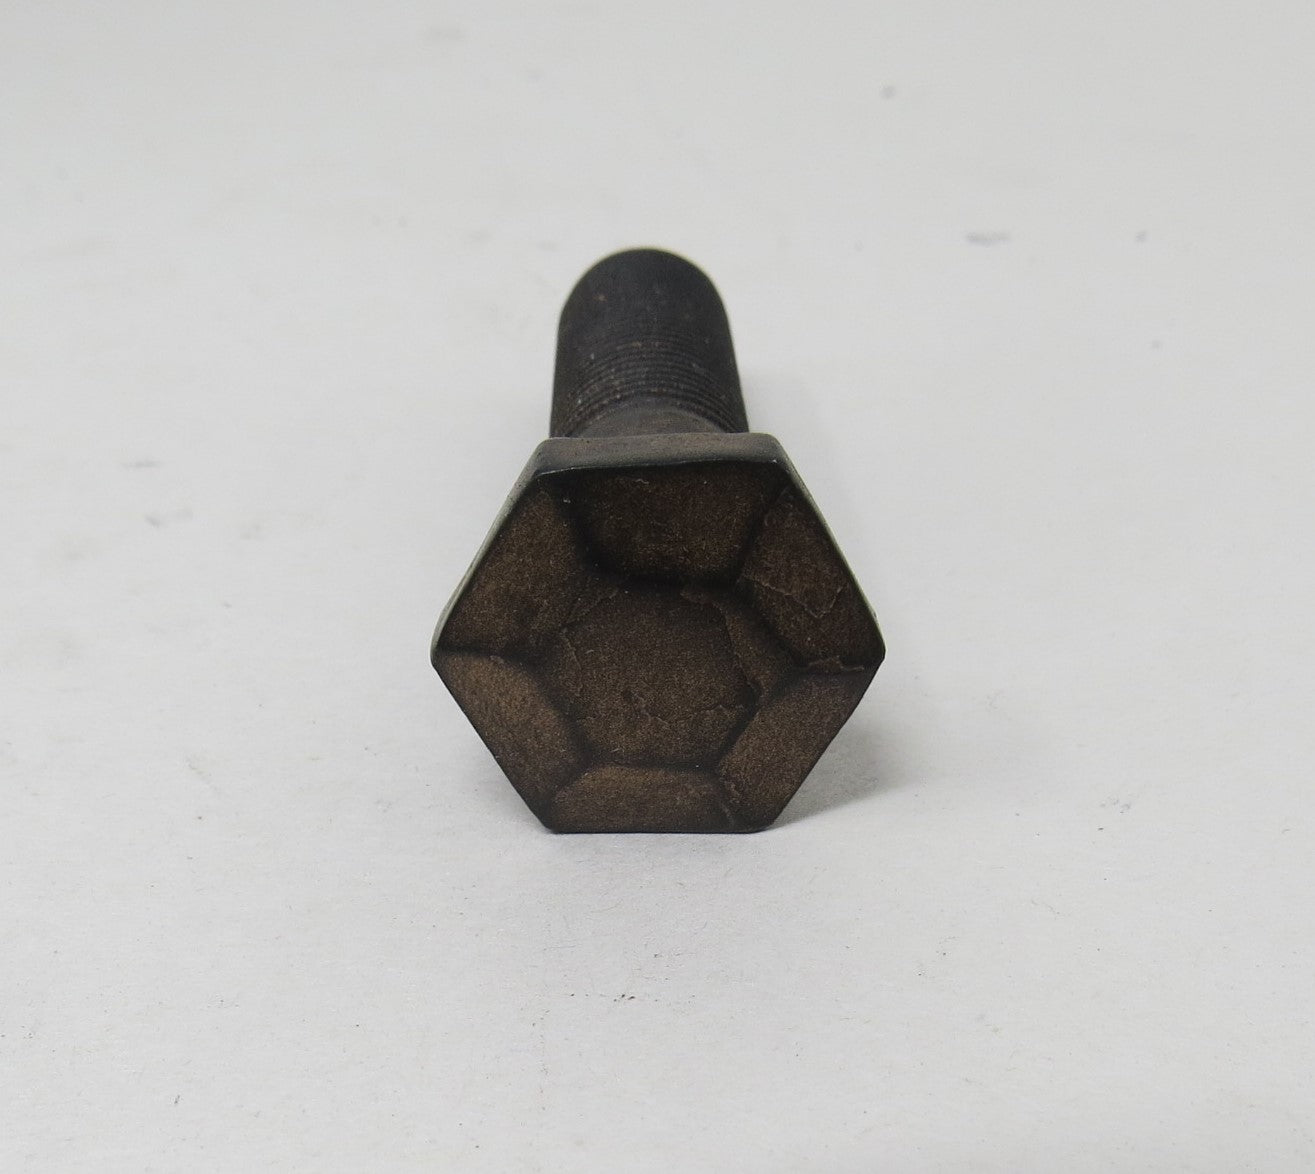 Perno de cabeza hexagonal piramidal de 5/8" de diámetro